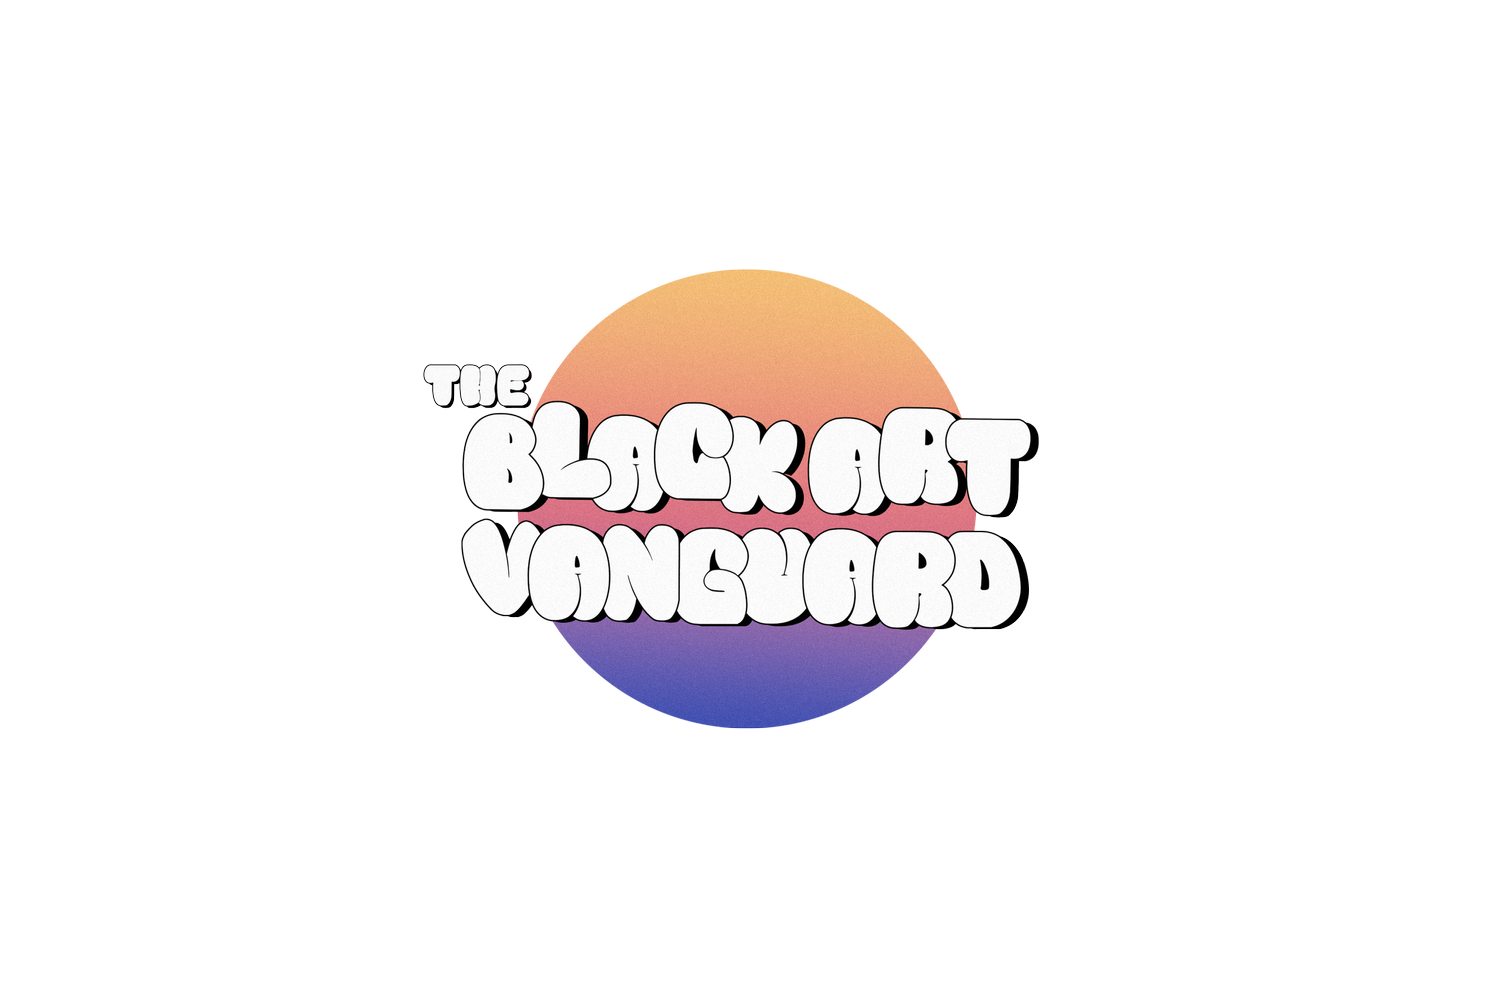 The Black Art Vanguard